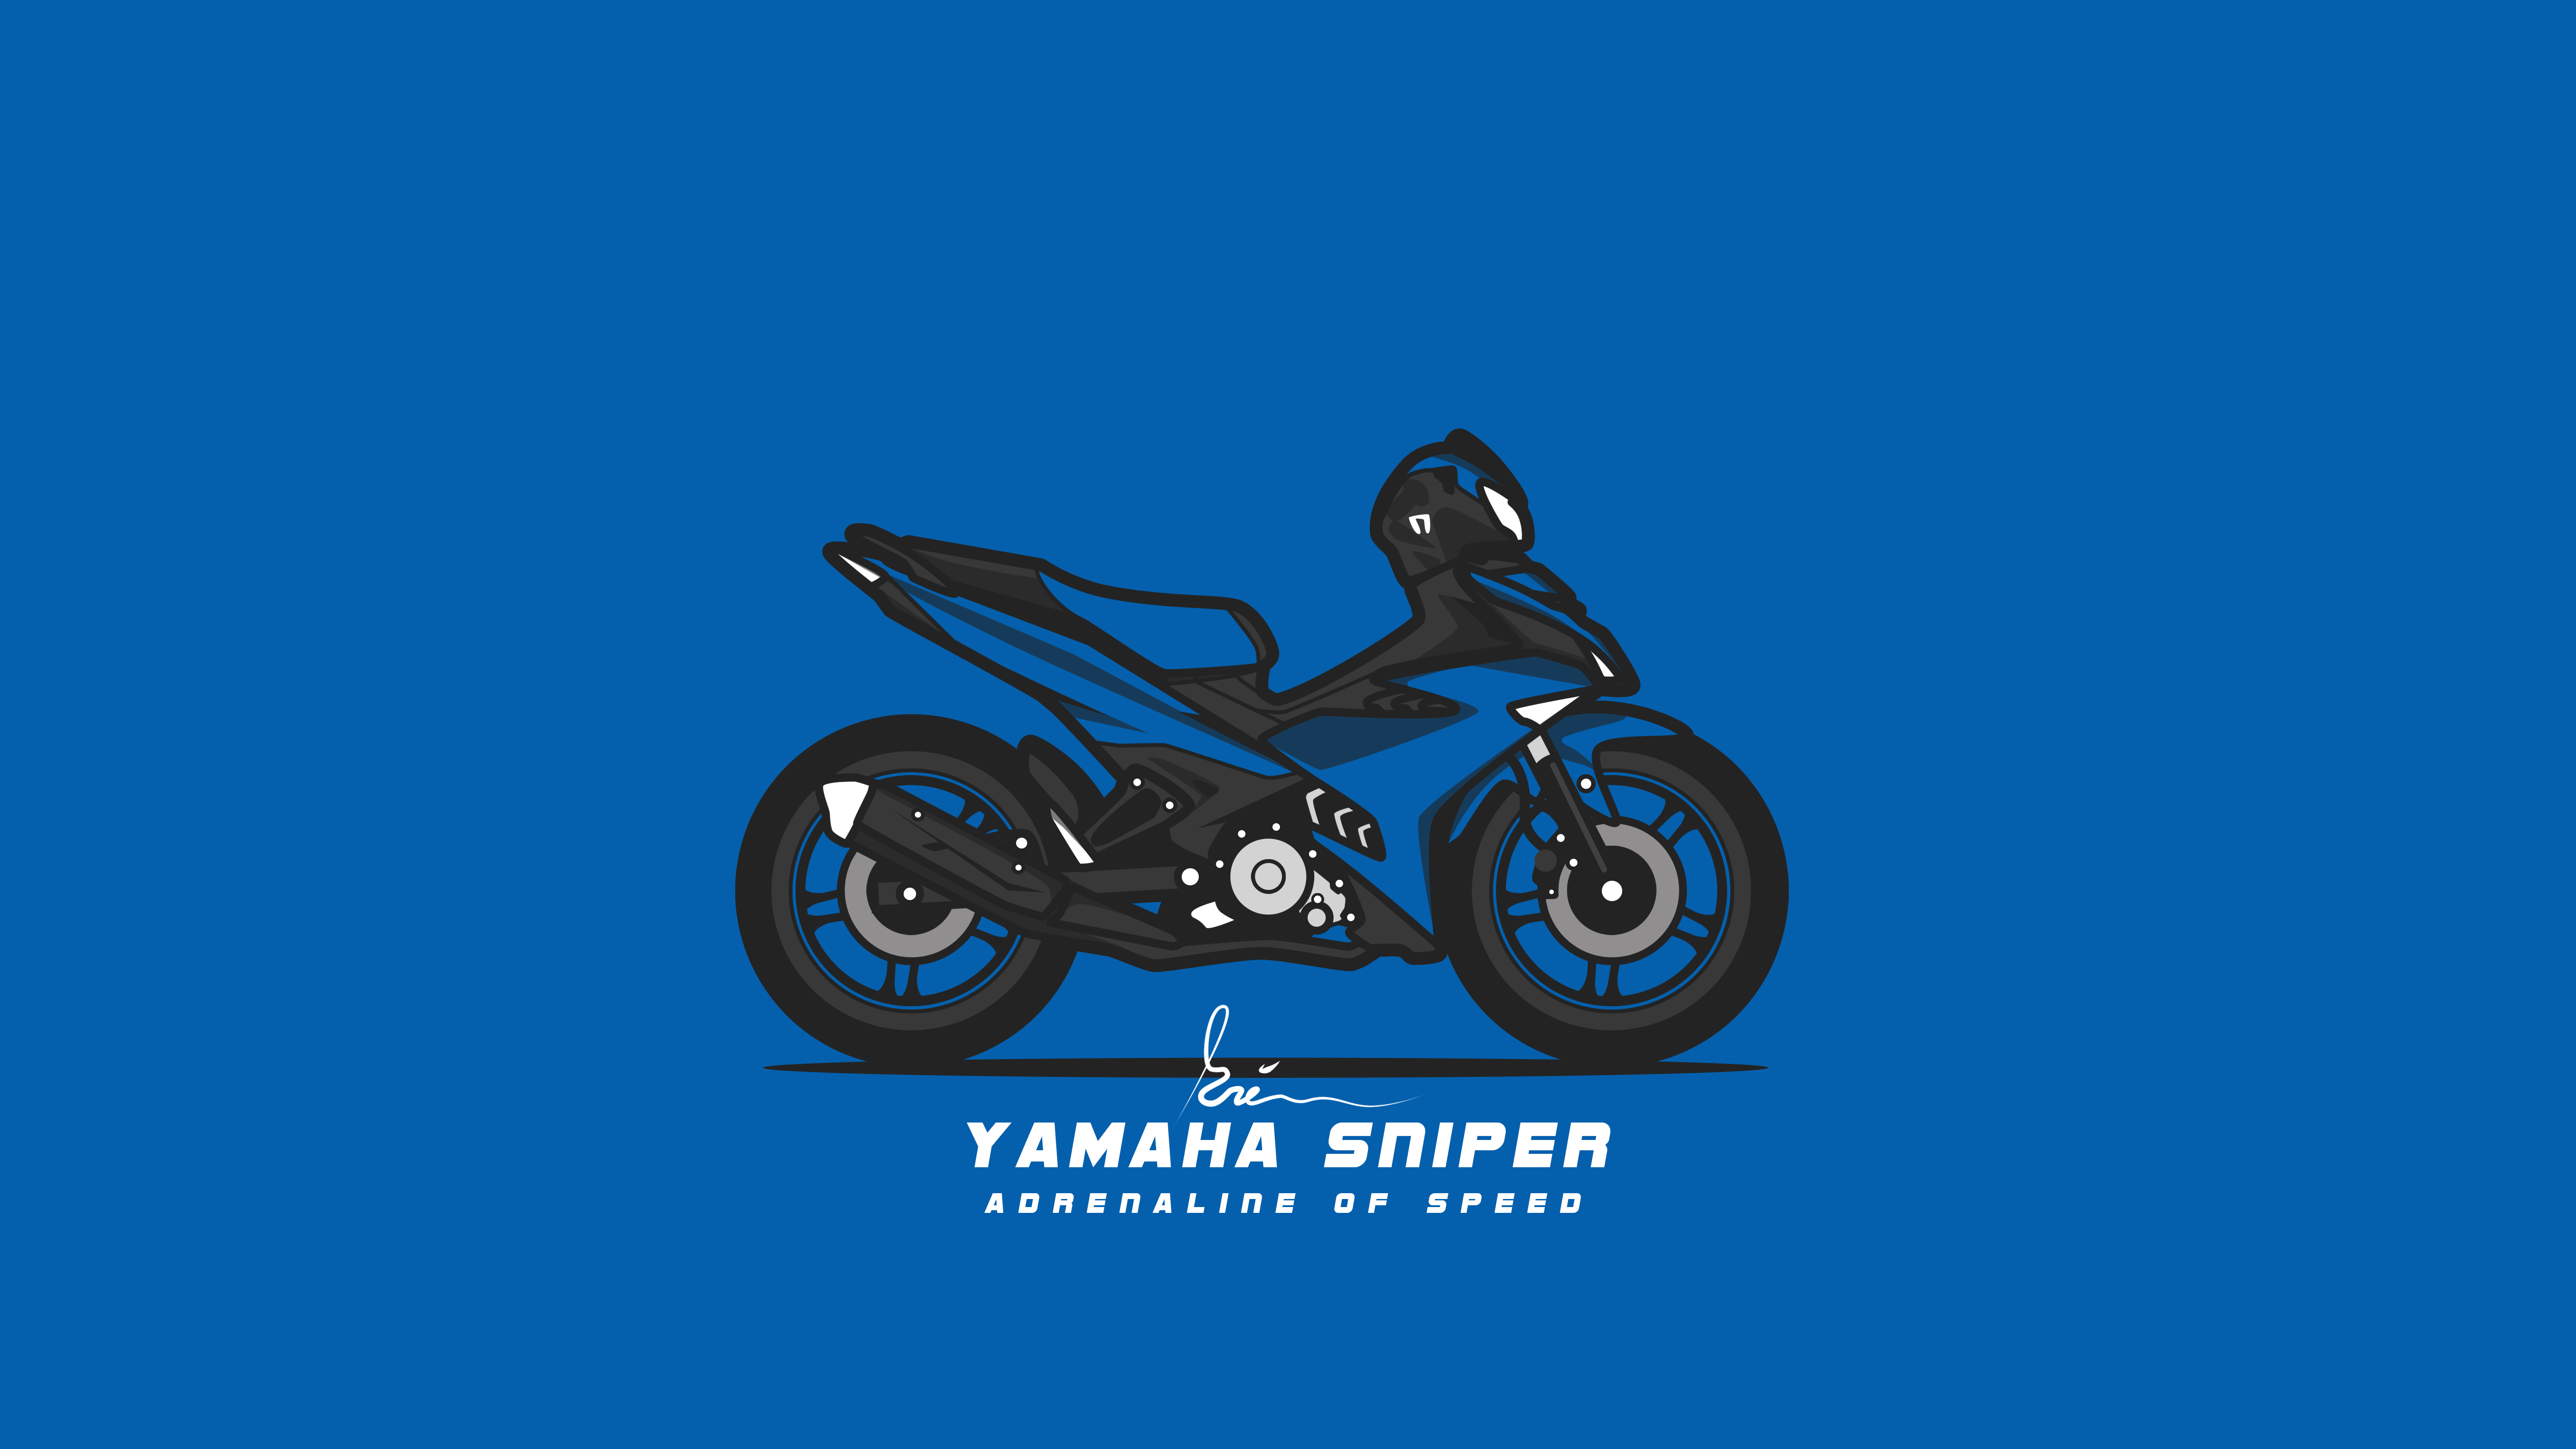 Yamaha Sniper. Blue artwork, Motorcycle artwork, Yamaha